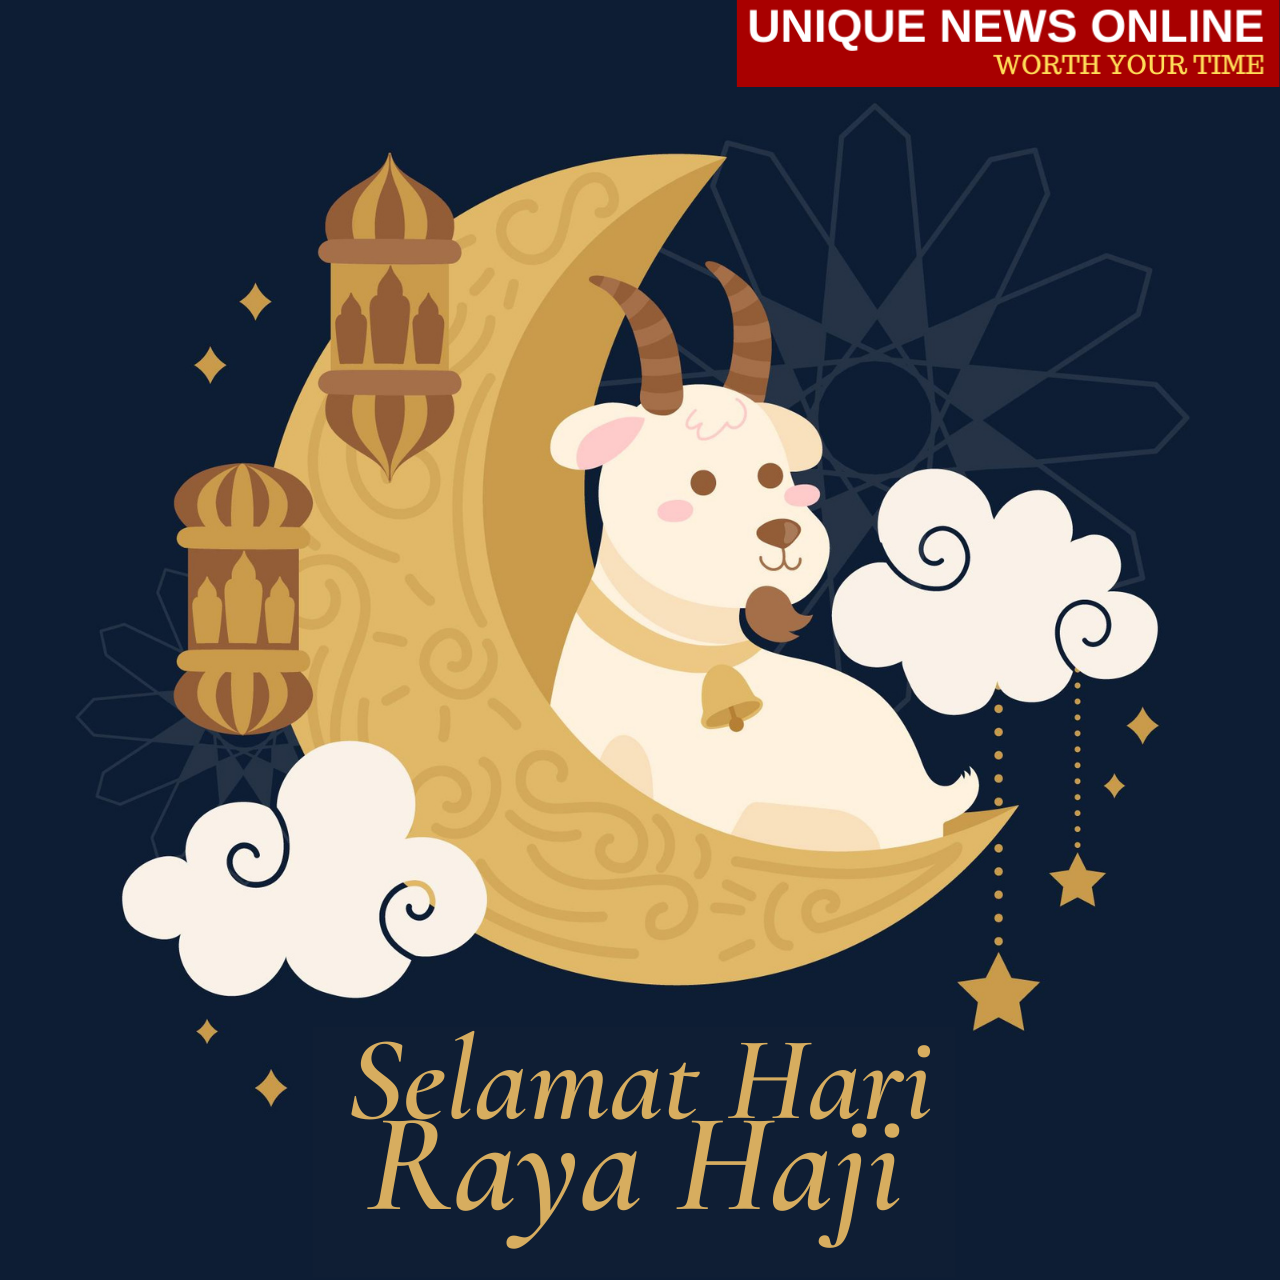 Hari Raya Haji 2021 Greetings & Eid Al-Adha HD Images: Selamat Hari Raya Haji Wishes, WhatsApp Stickers, Bakrid Facebook Messages, GIF and SMS to Celebrate the Festival of Sacrifice